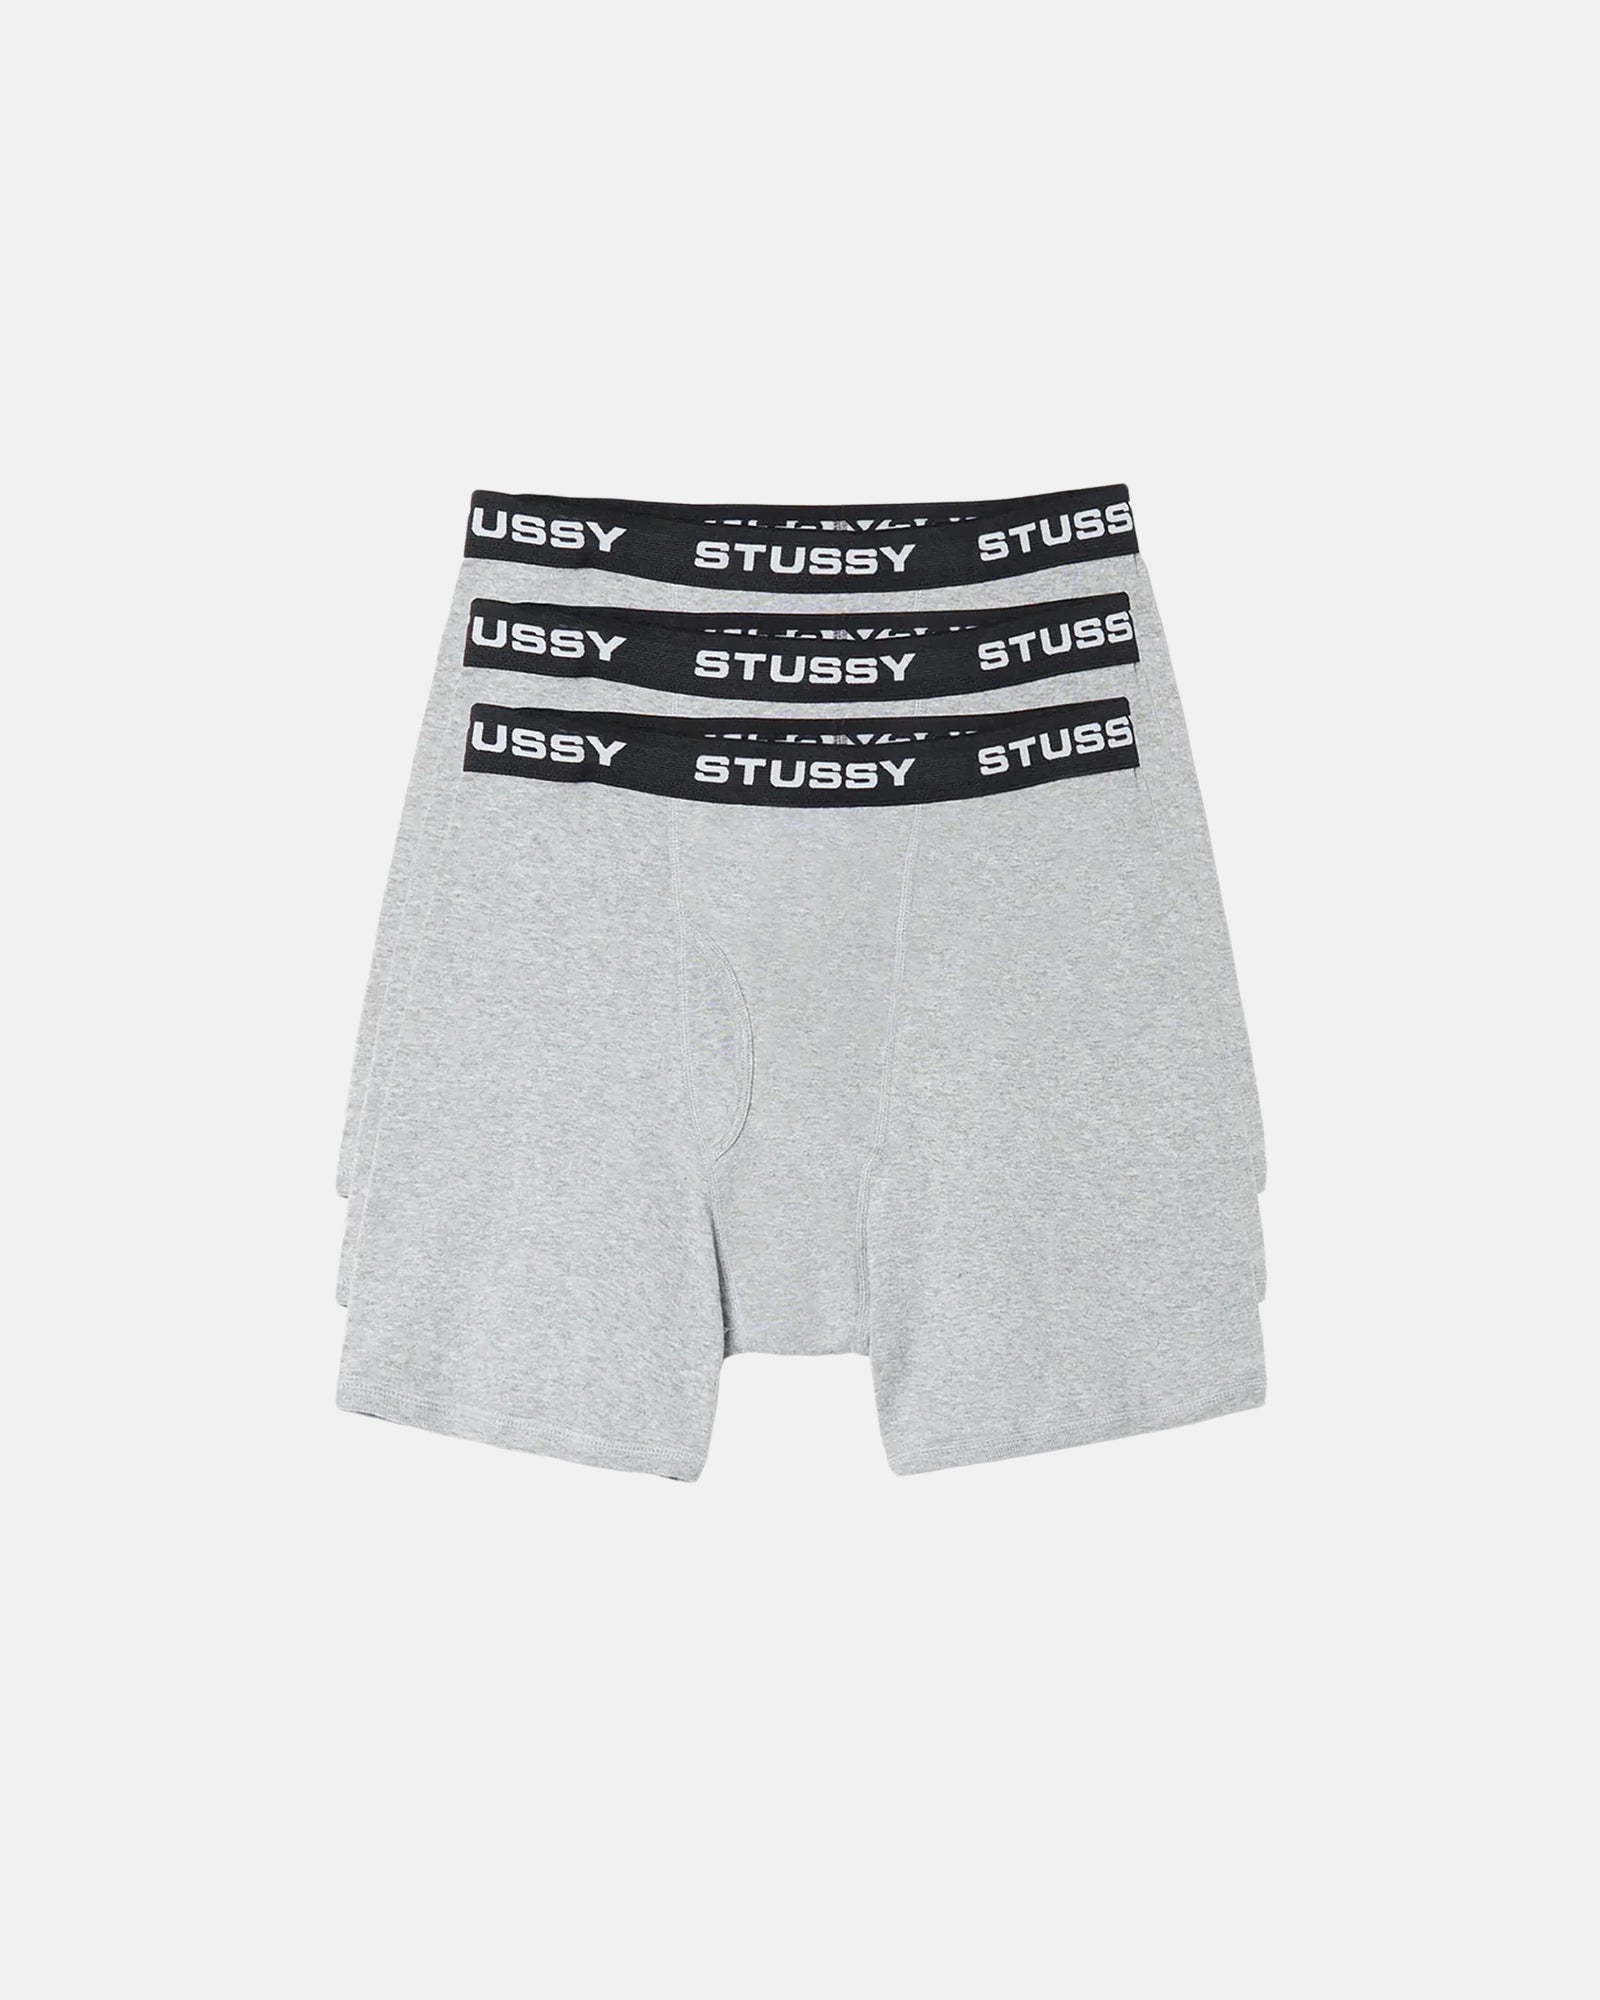 Stussy Boxer Briefs - Unisex Shorts & Trunks | Stüssy